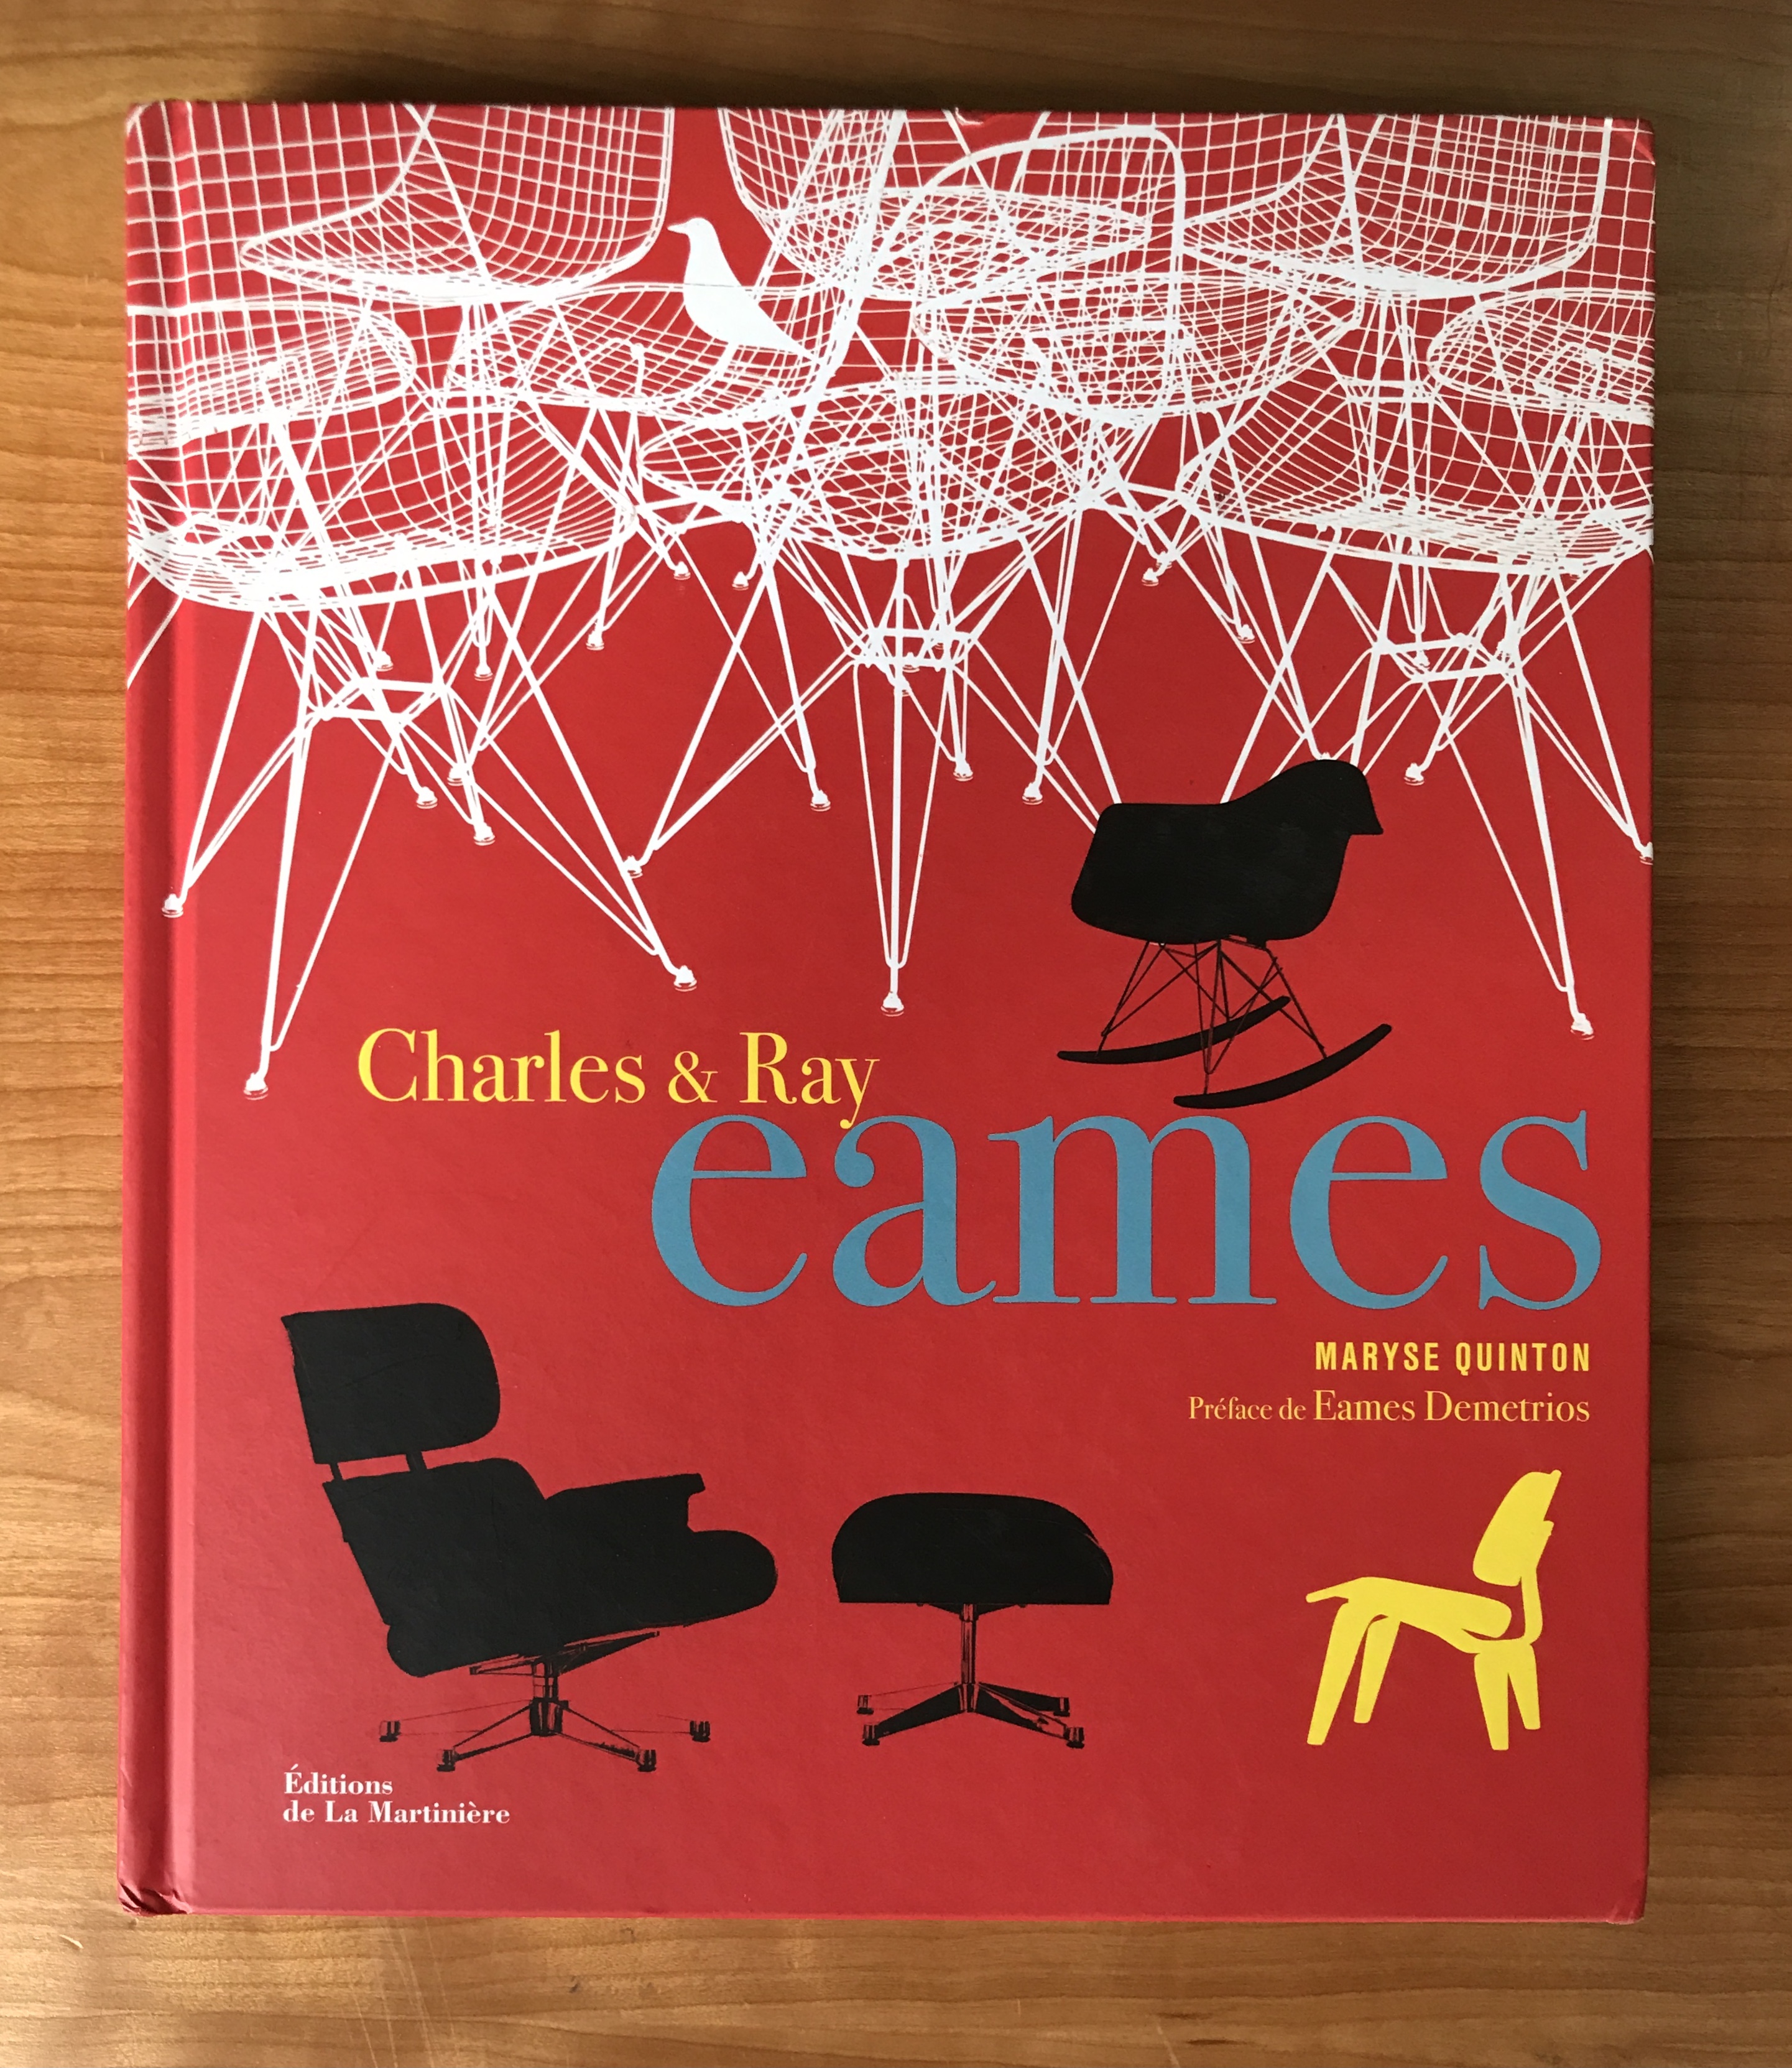 Charles & Ray Eames - Quinton, Maryse and Eames Demetrios